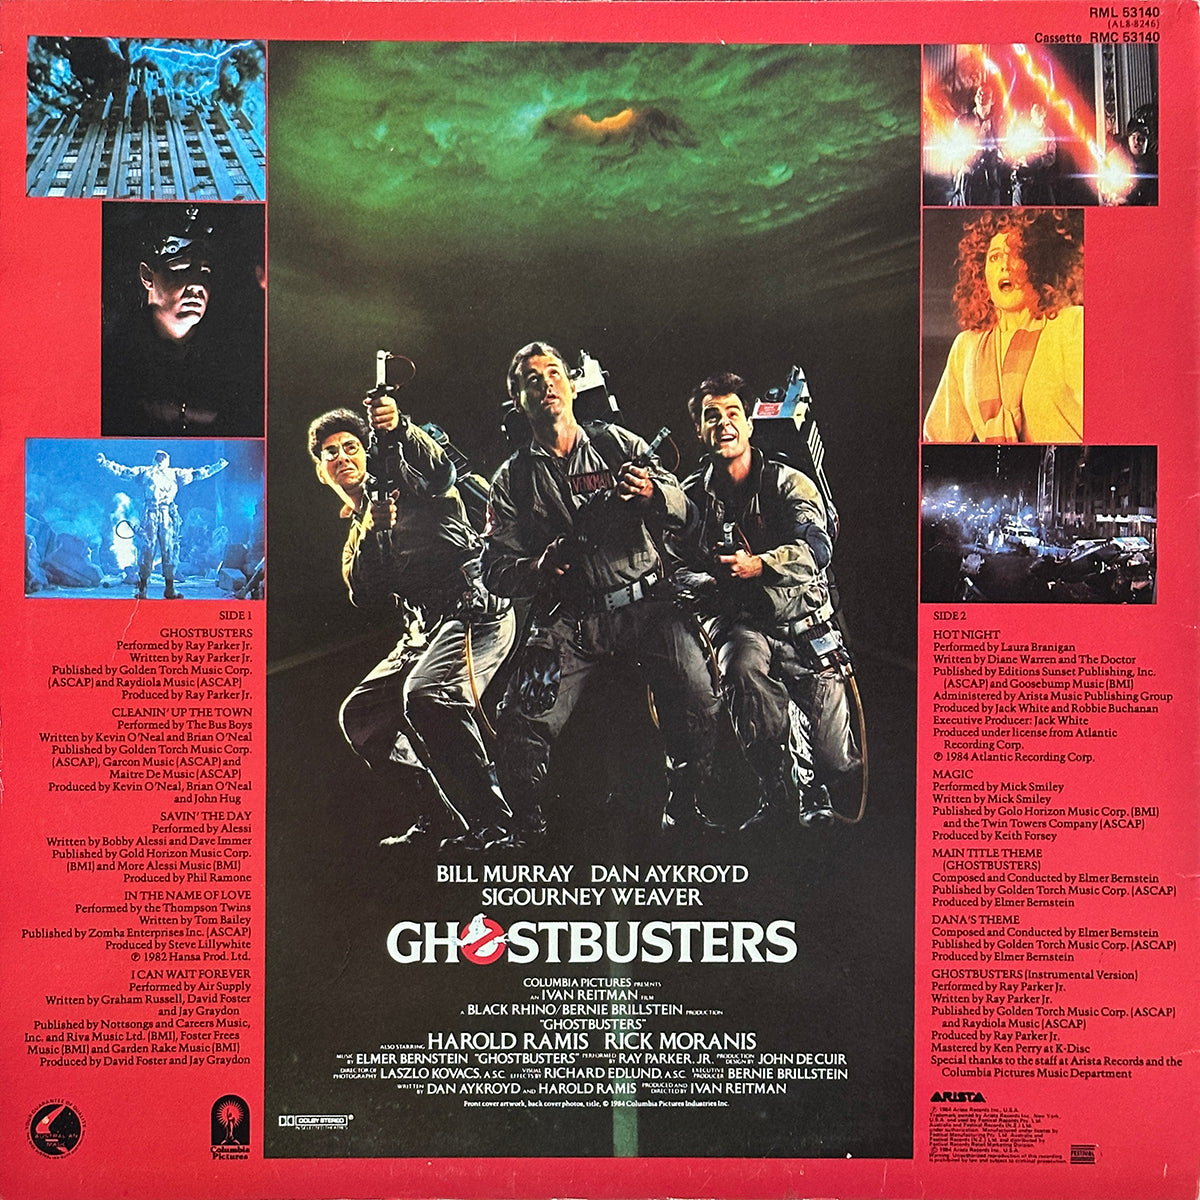 Ghostbusters (Original Soundtrack Album)